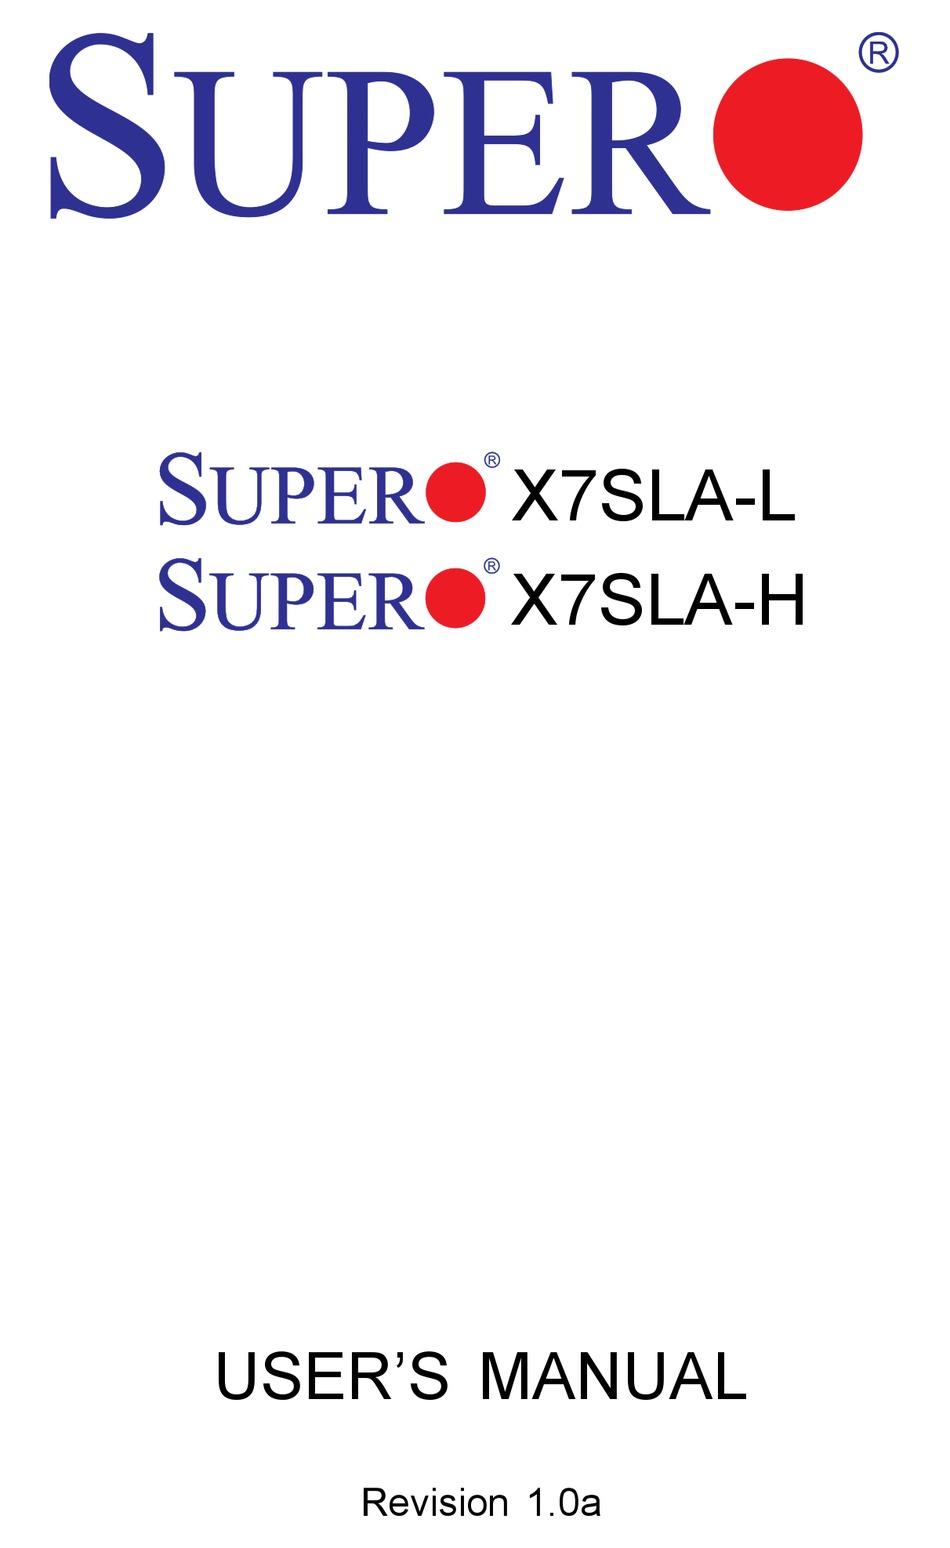 SUPERO X7SLA-H USER MANUAL Pdf Download | ManualsLib